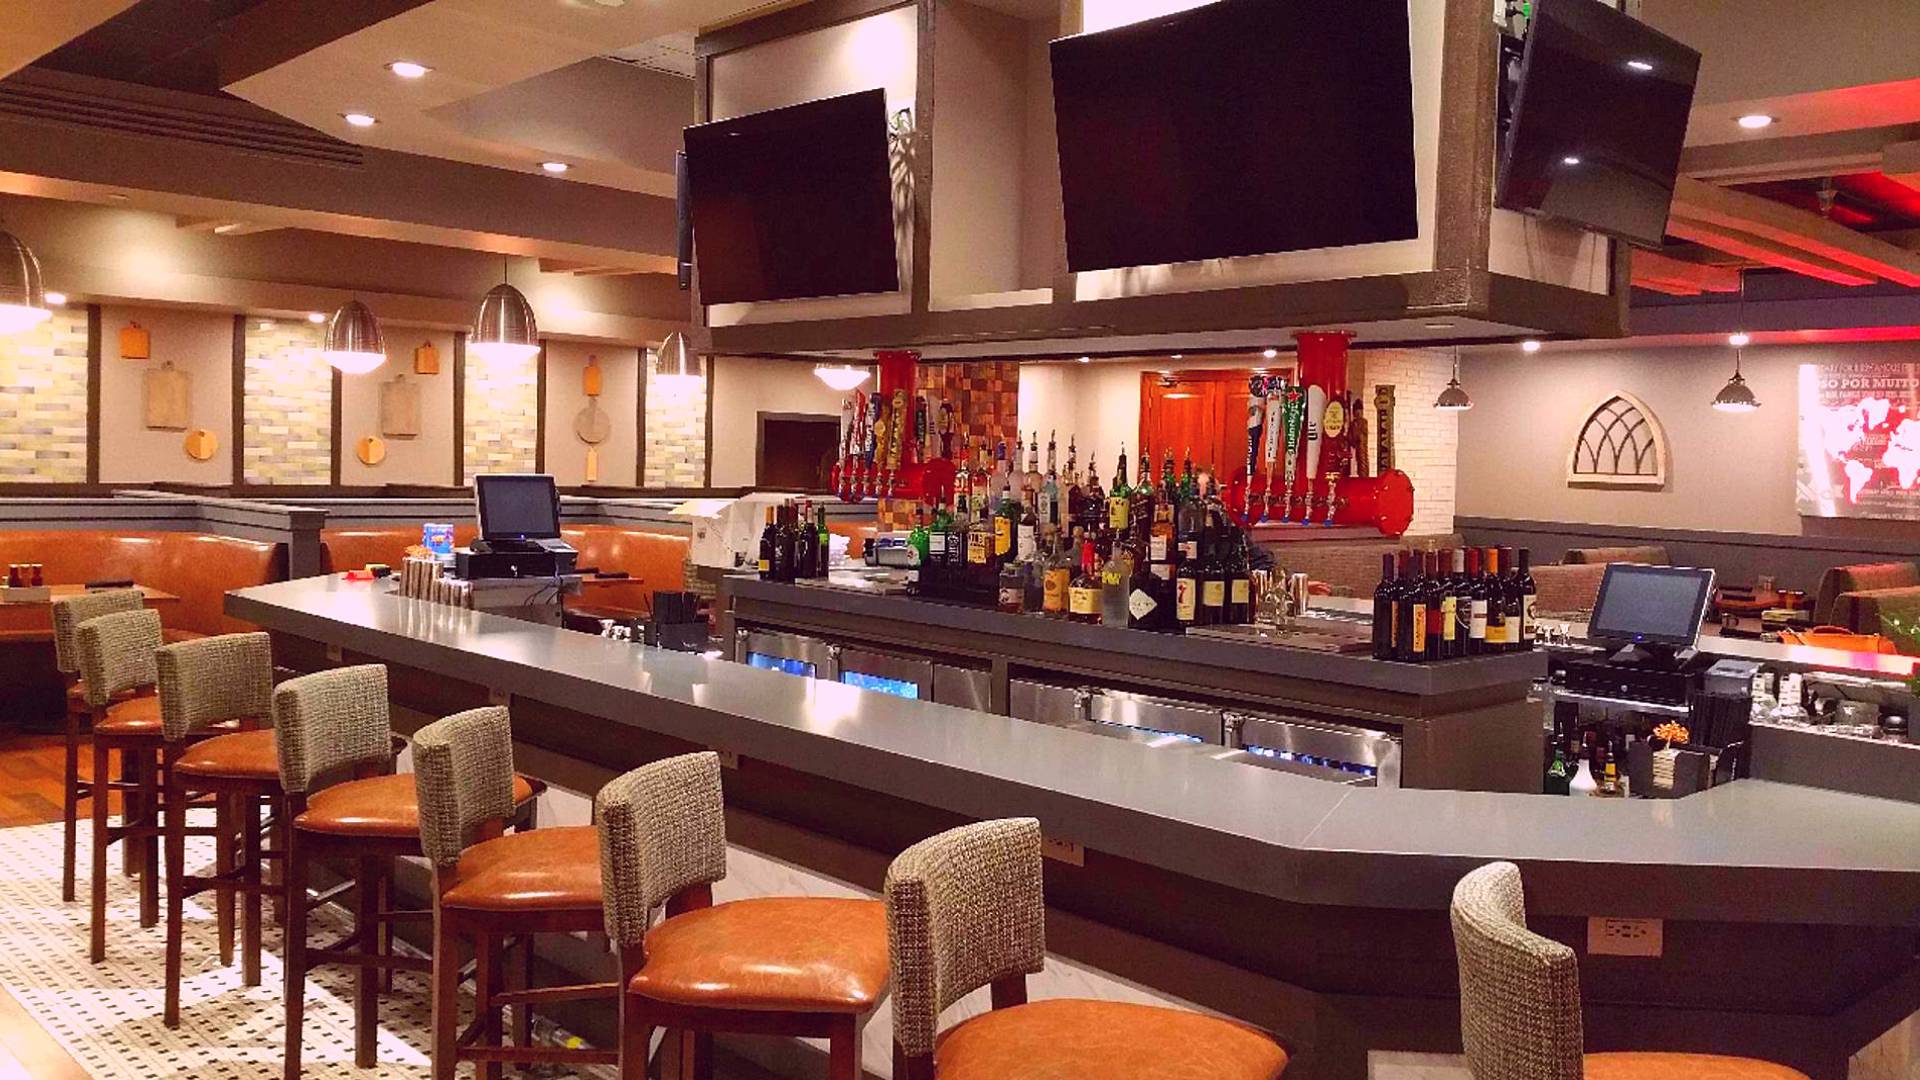 Photo of bar designed for a hotel restaurant using architectural bar design